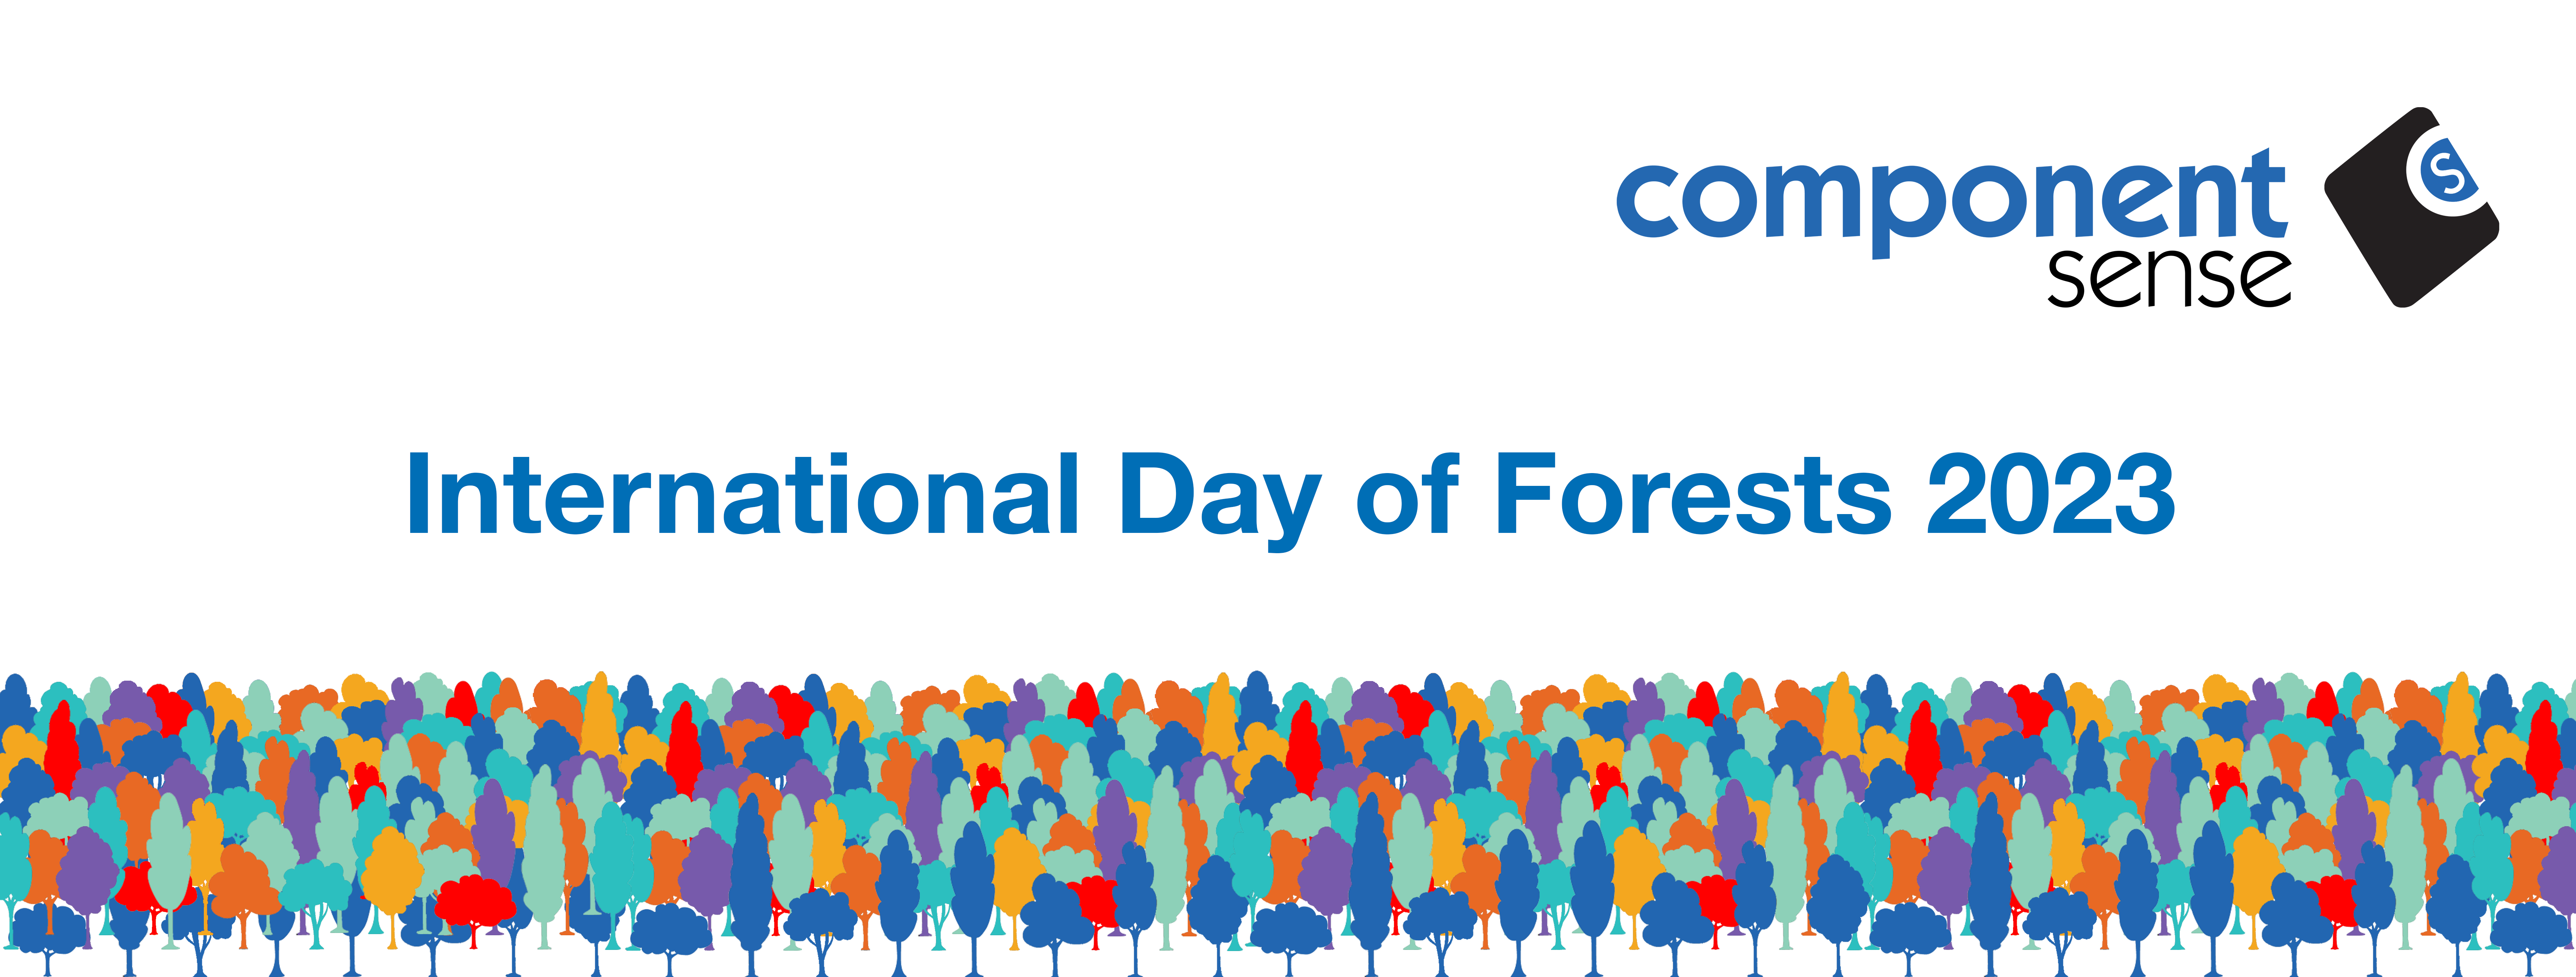 International Day of Forests Blog Banner 